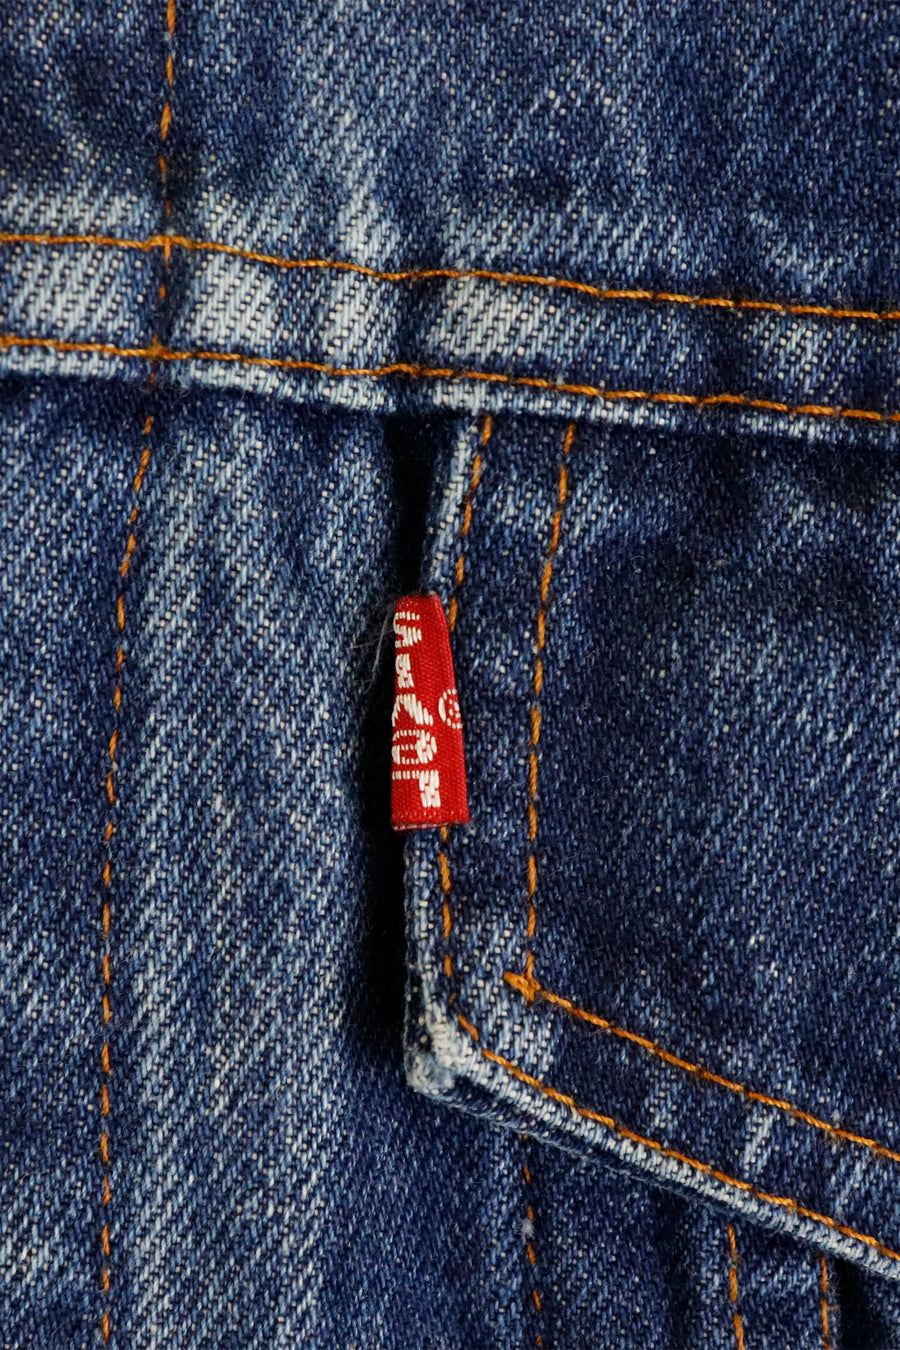 Vintage Levi Brand Denim Side Pocket Jacket Sz XL